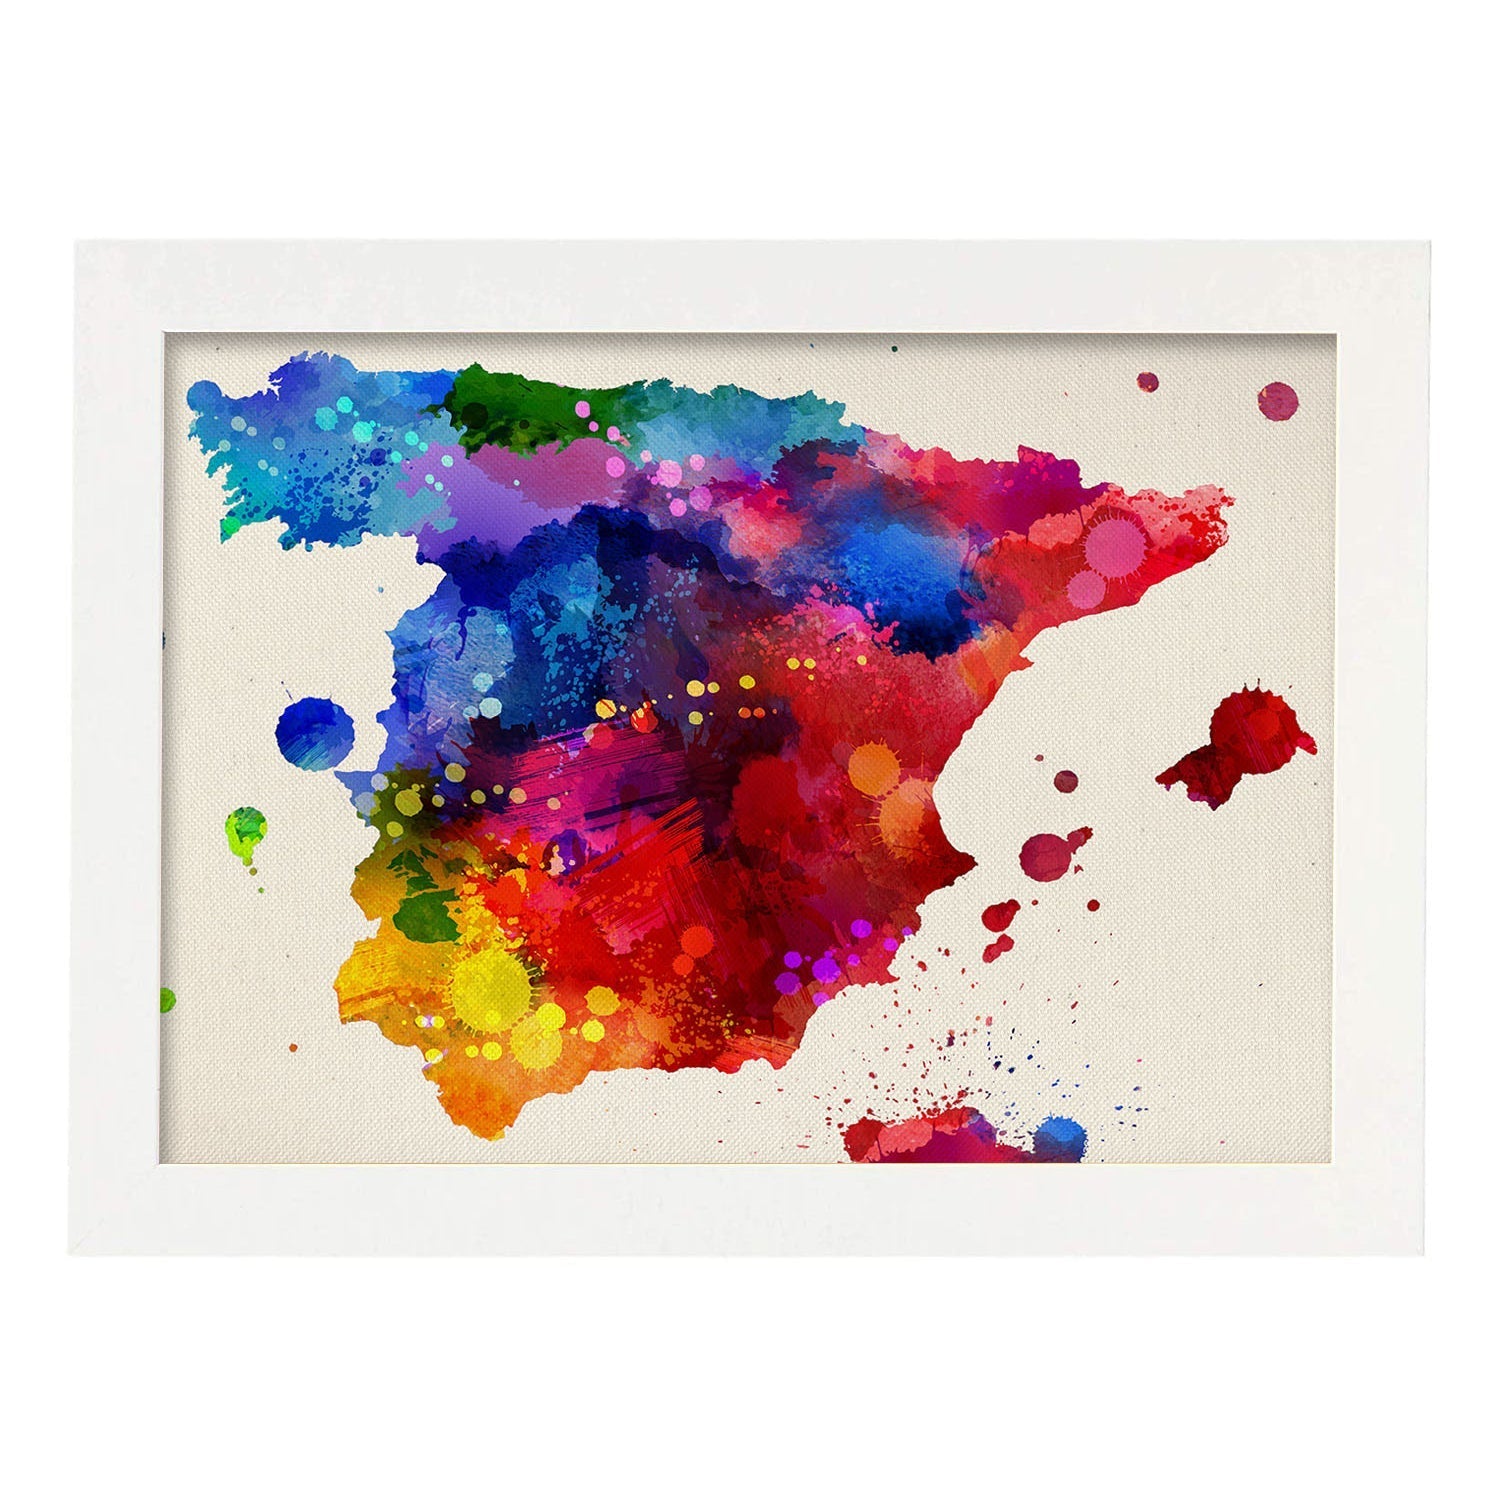 Poster de Mapa Espana 2. Láminas e ilustraciones de ciudades, comunidades, y mapas de España.-Artwork-Nacnic-A4-Marco Blanco-Nacnic Estudio SL